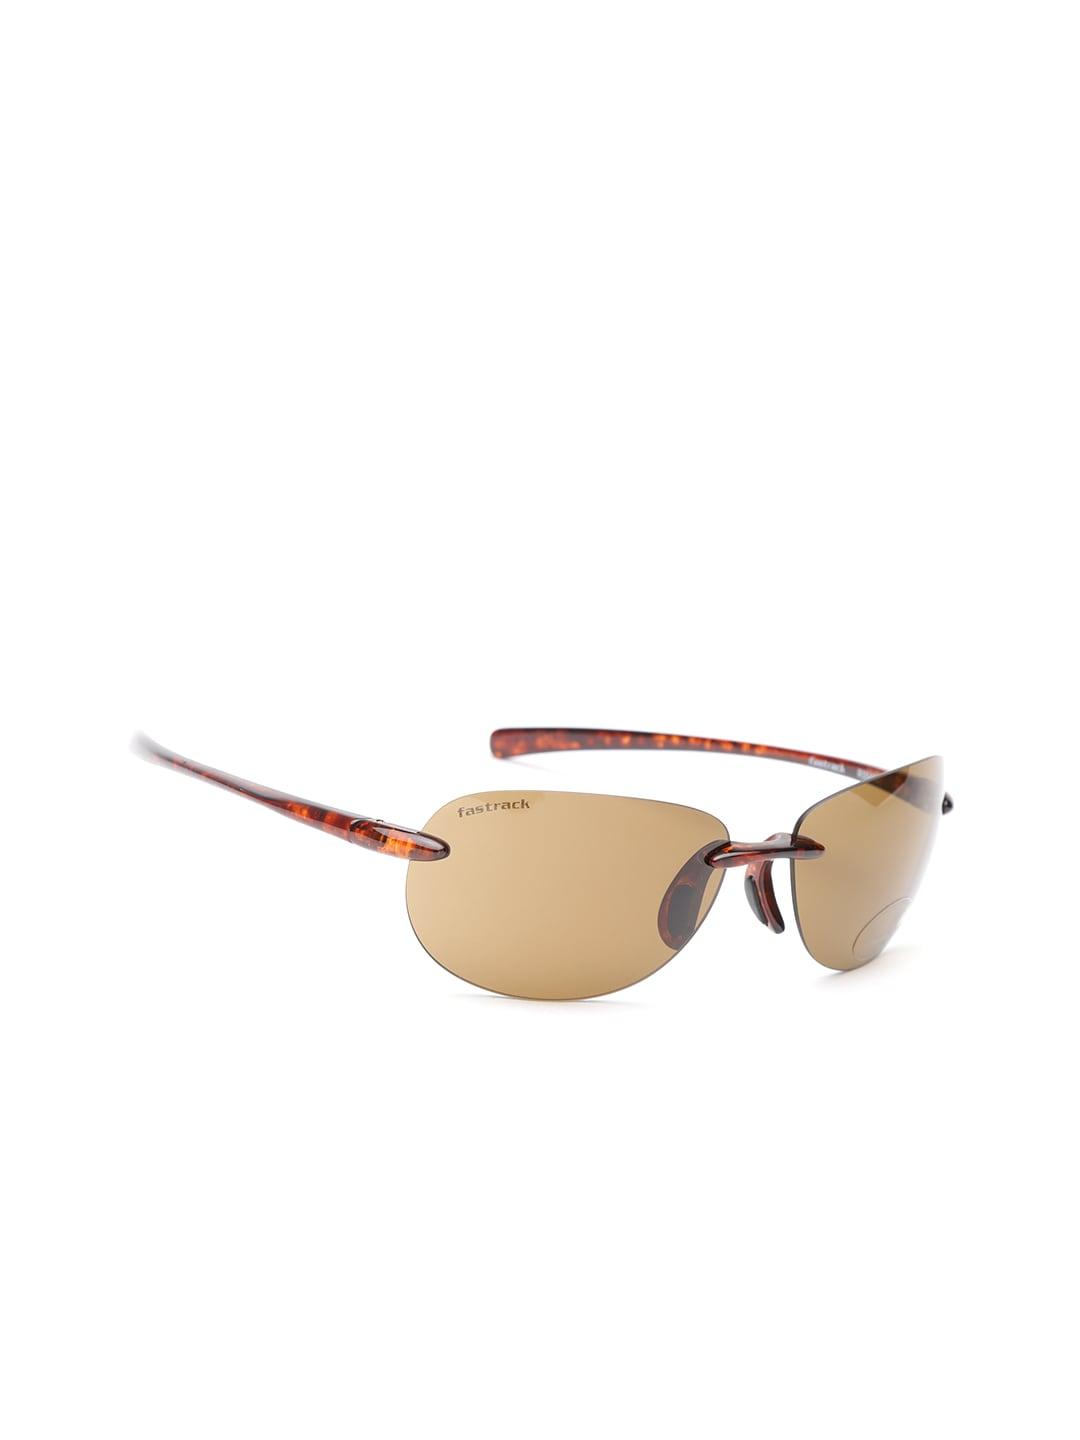 fastrack-men-rimless-oval-sunglasses-nbr054br2